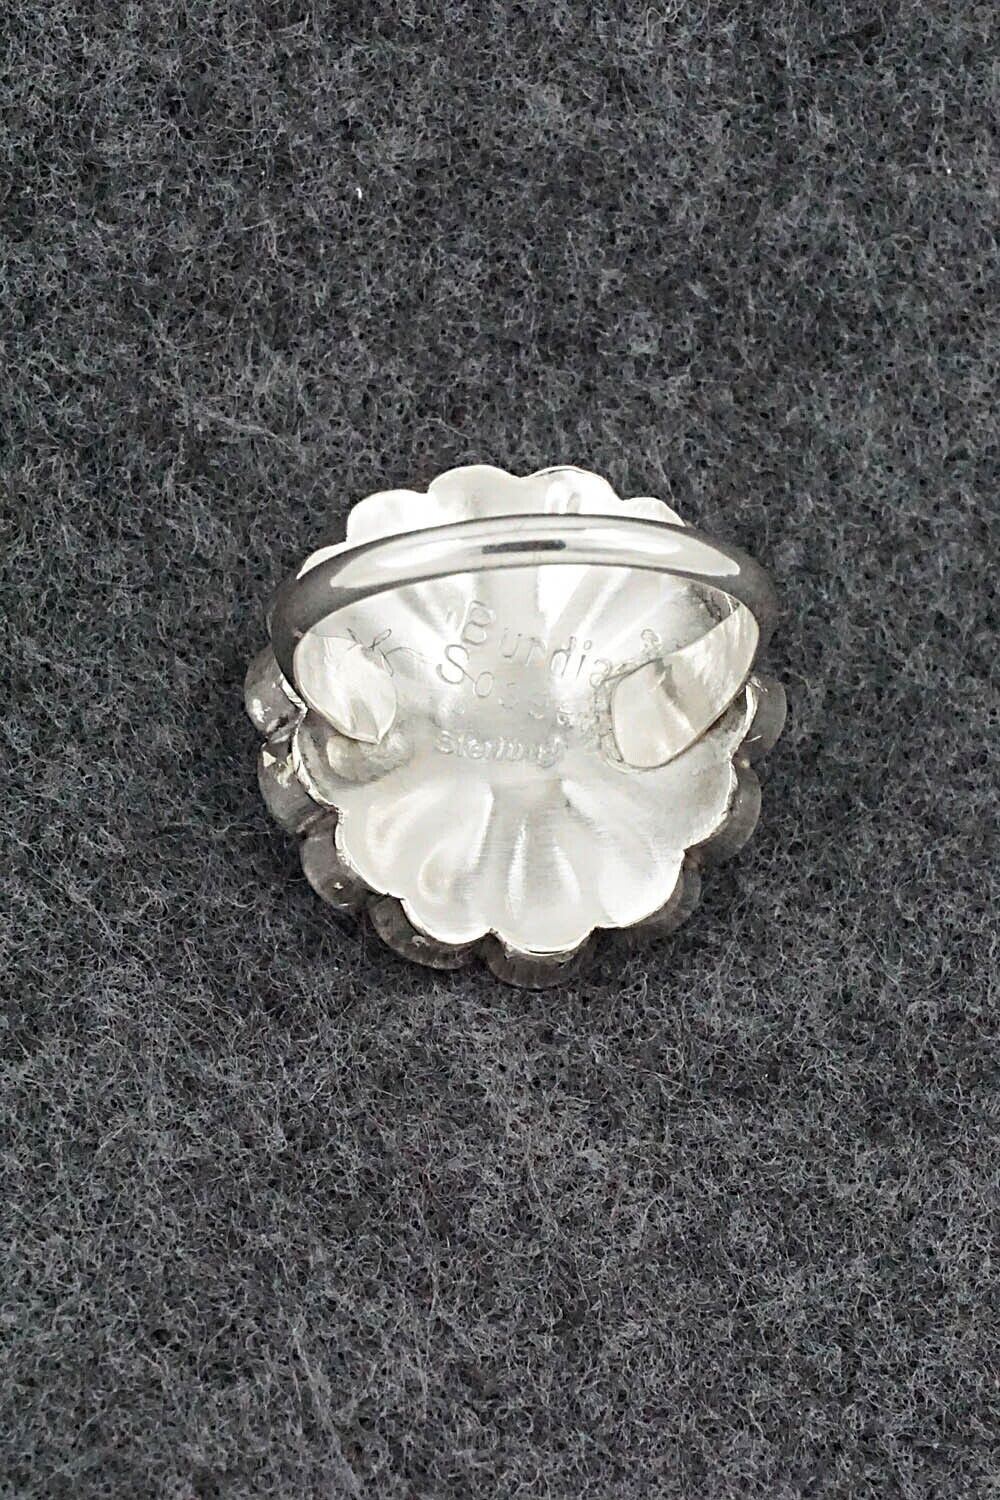 Multi-Stone & Sterling Silver Ring - Burdian Soseeah - Size 8.25